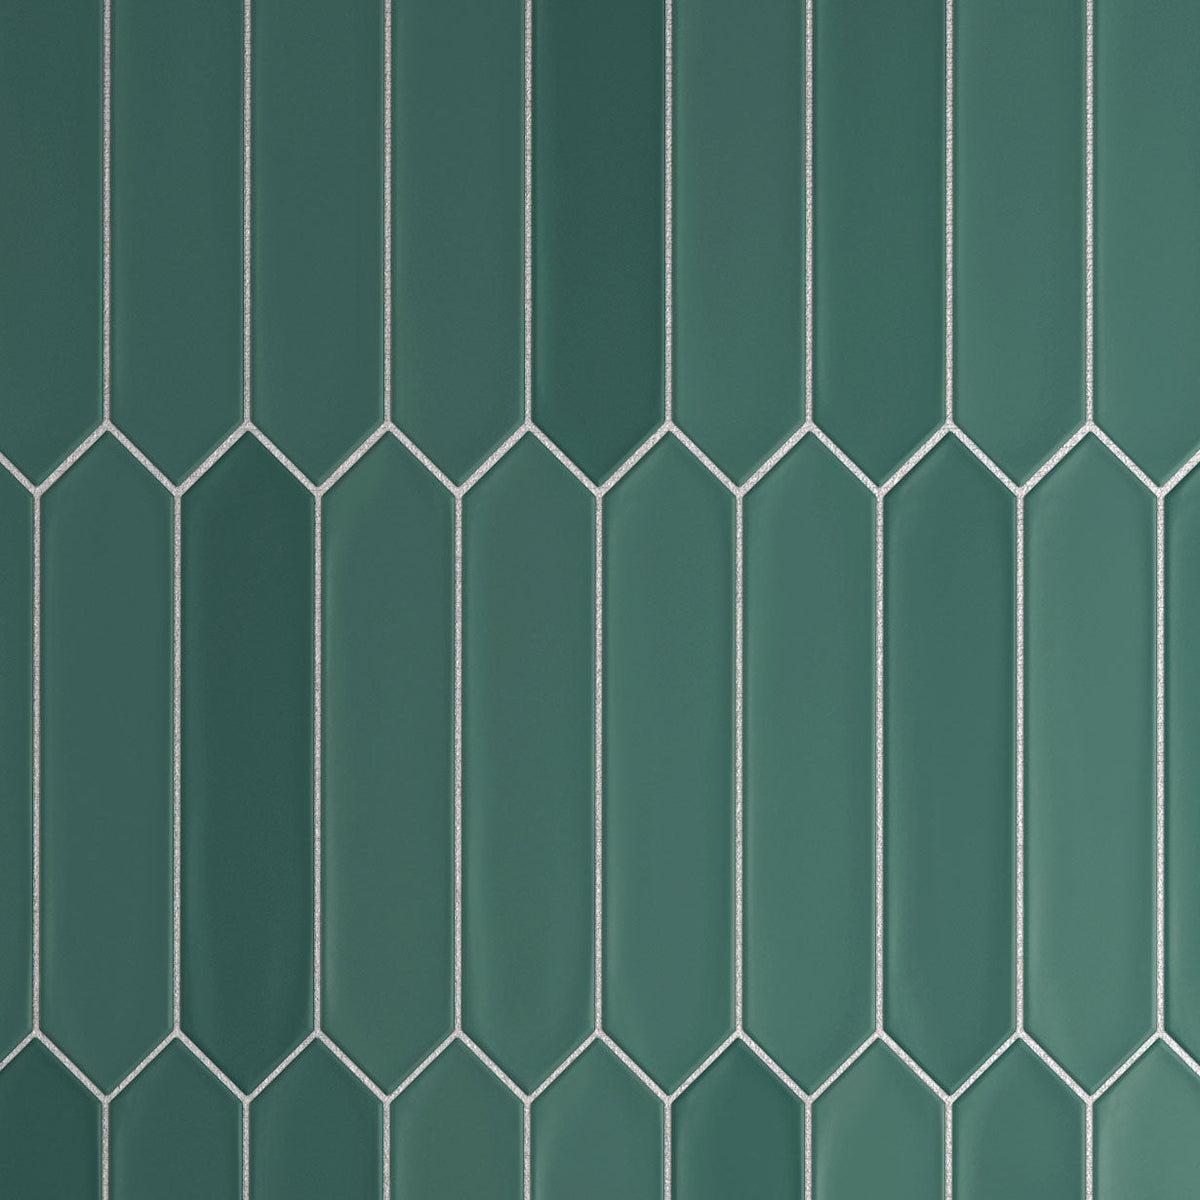 Green ceramic picket tile